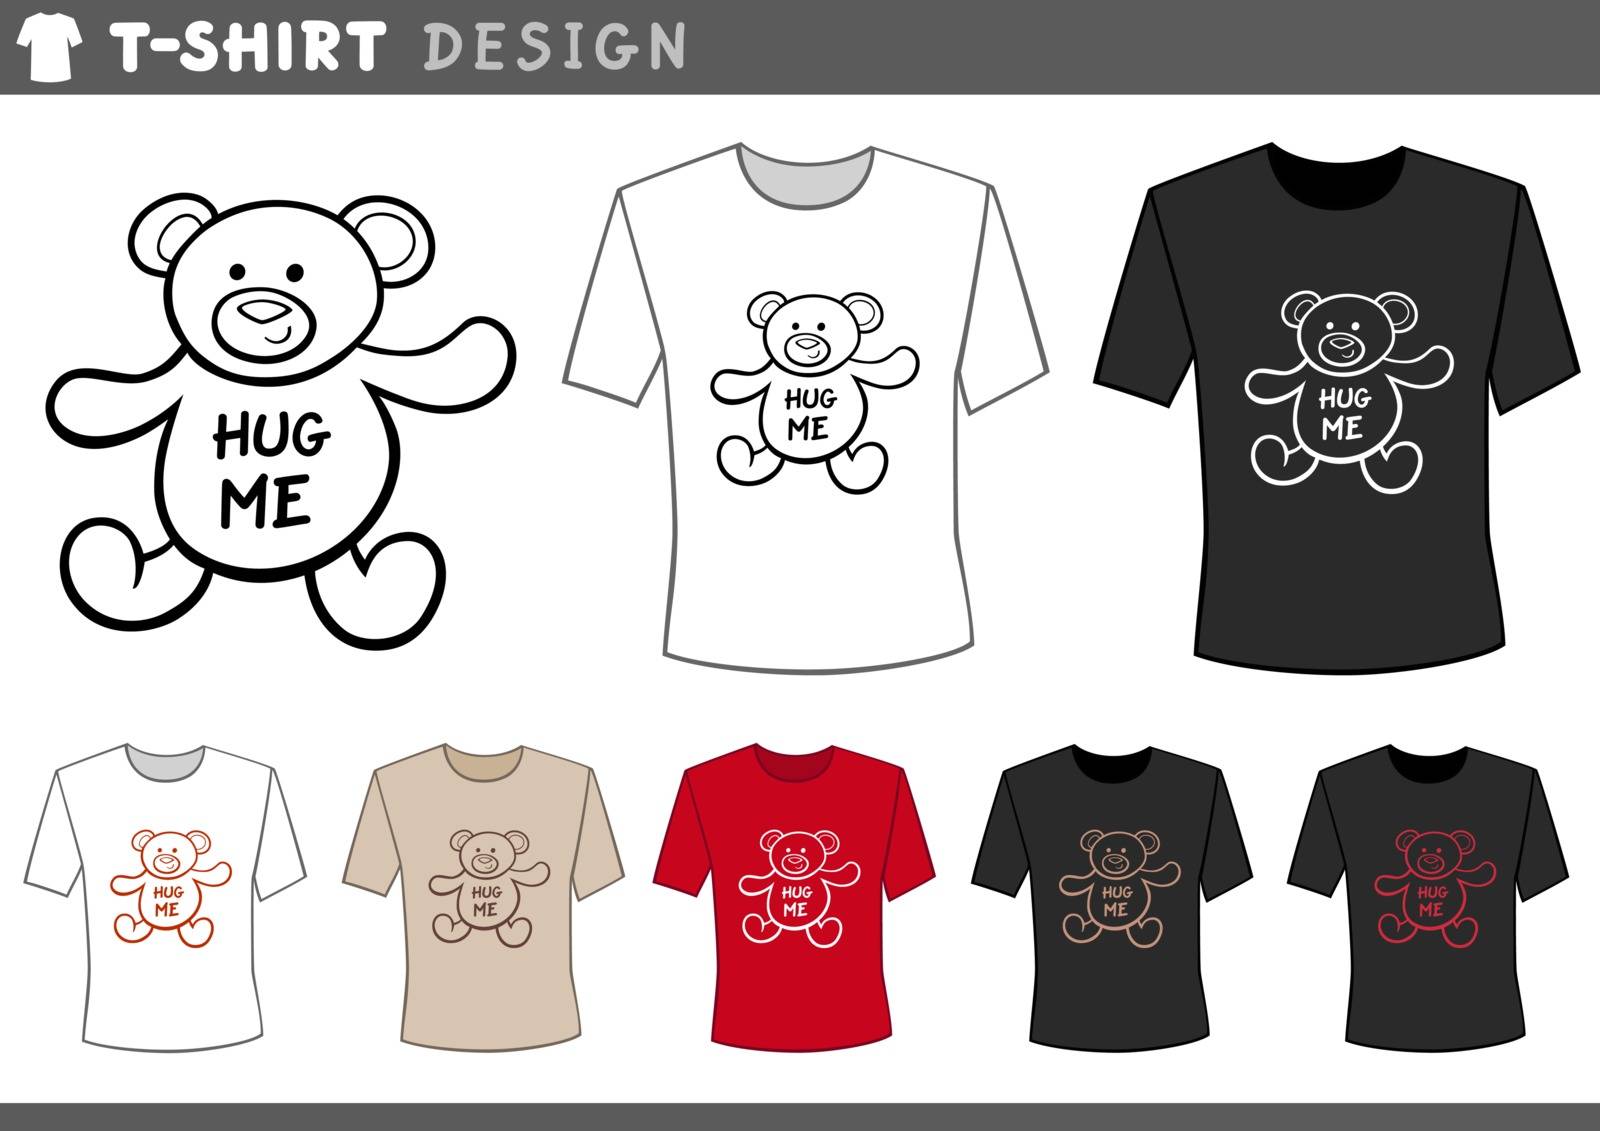 Illustration of T-Shirt Design Template with Cute Cartoon Teddy Bear and Hug me Inscription